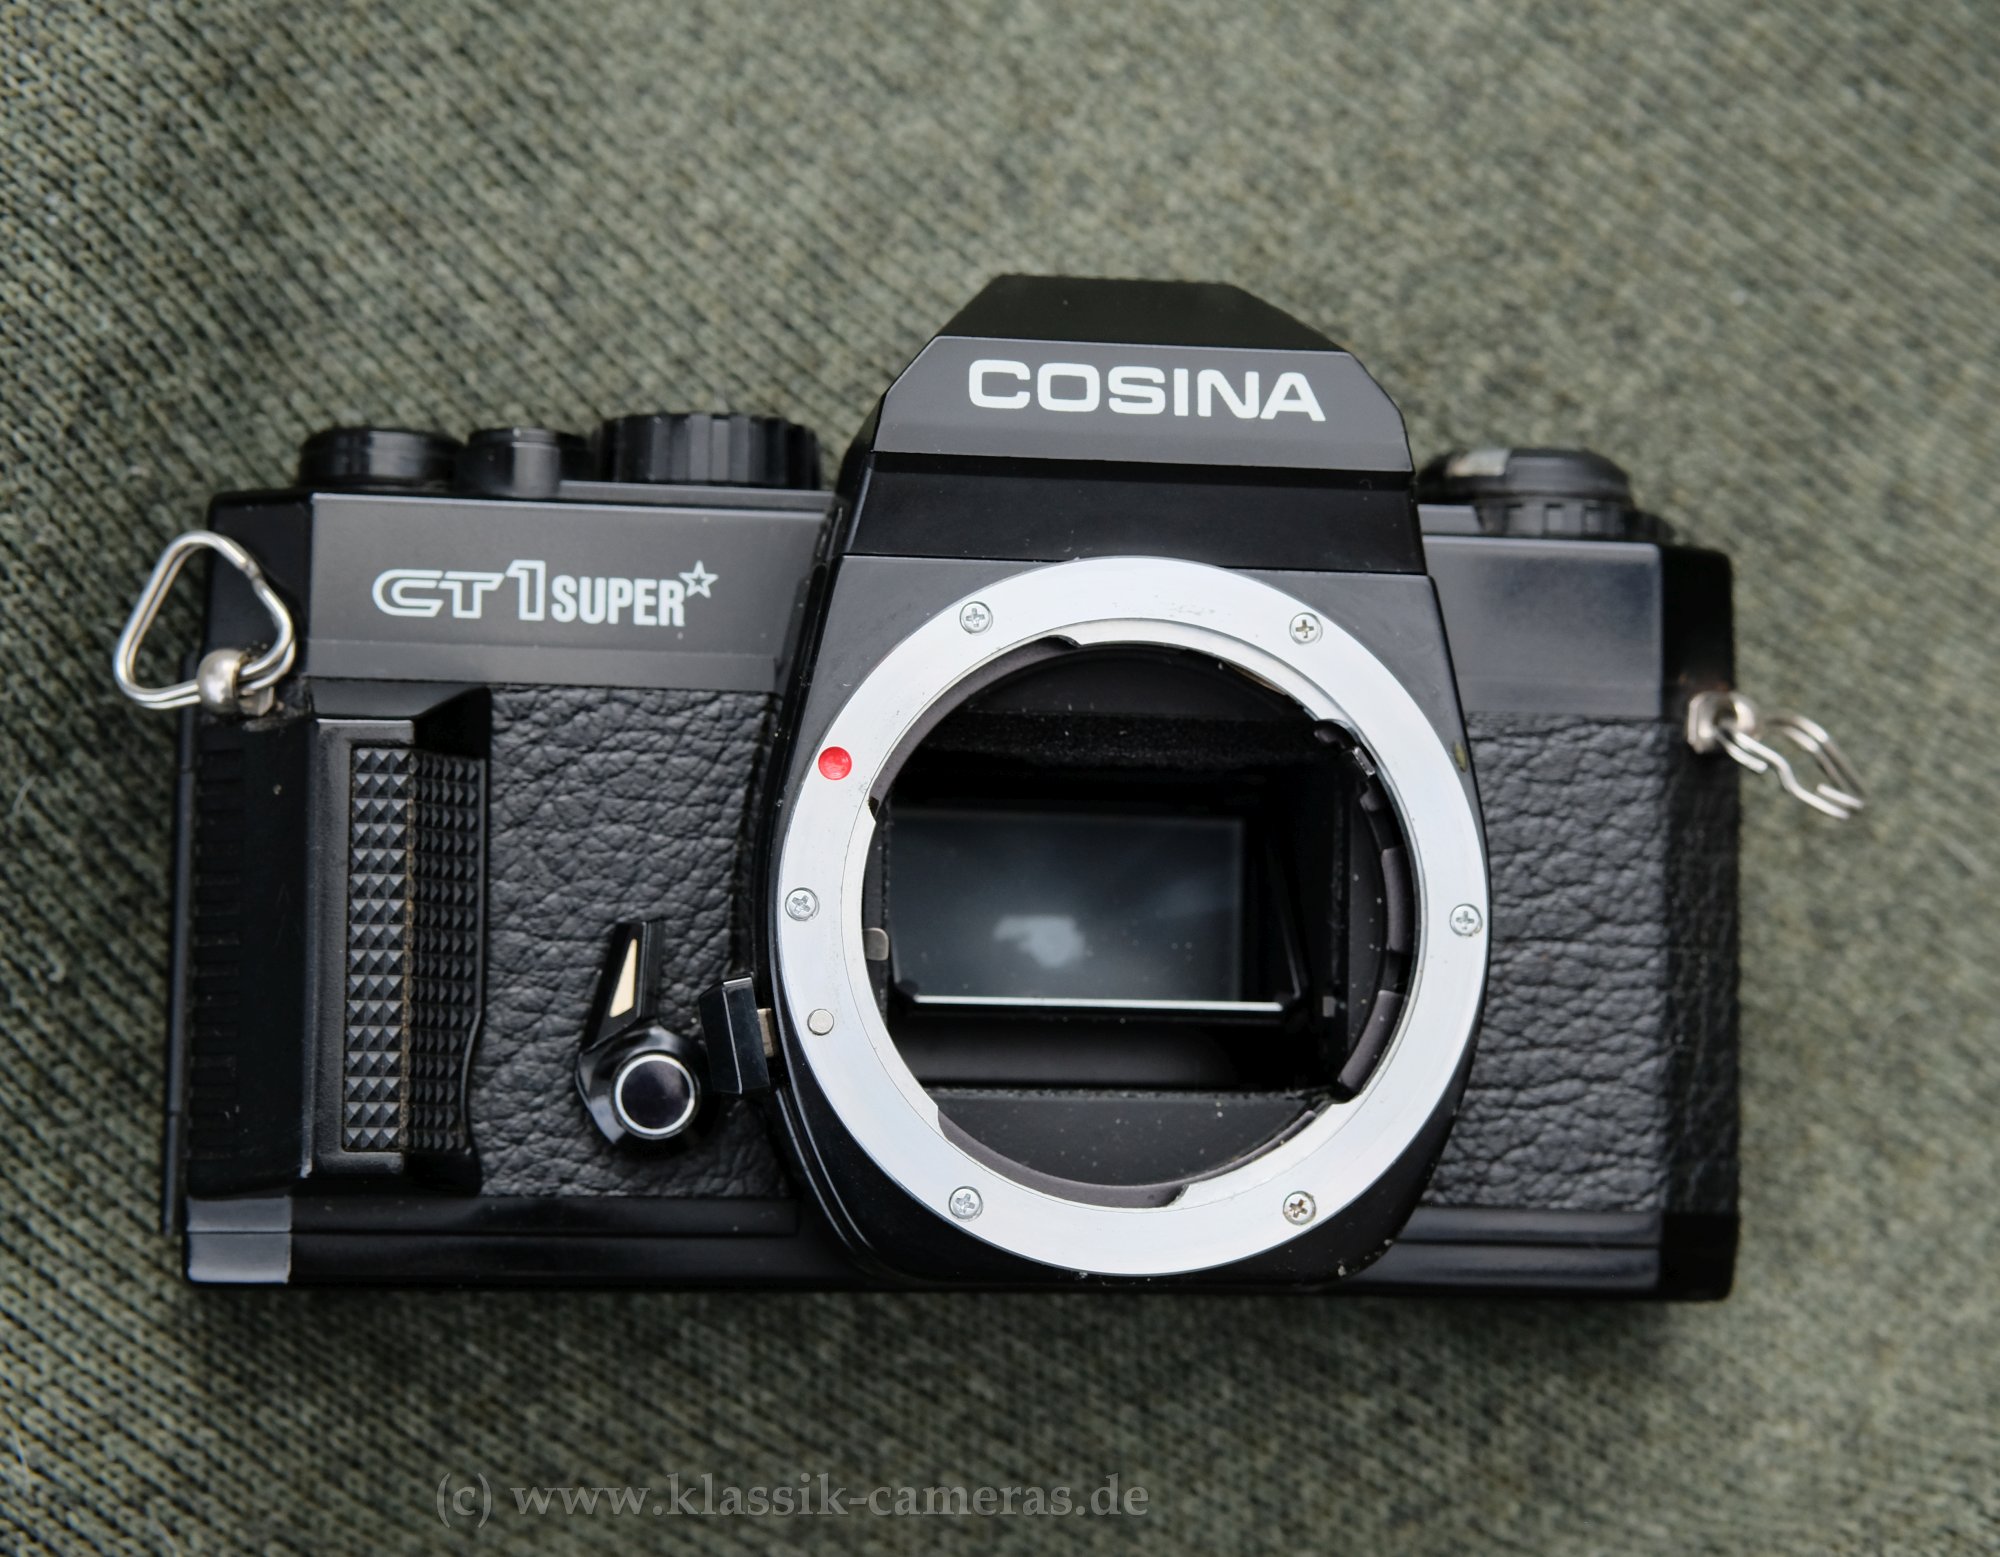 The Cosina CT1
          super* lens mount